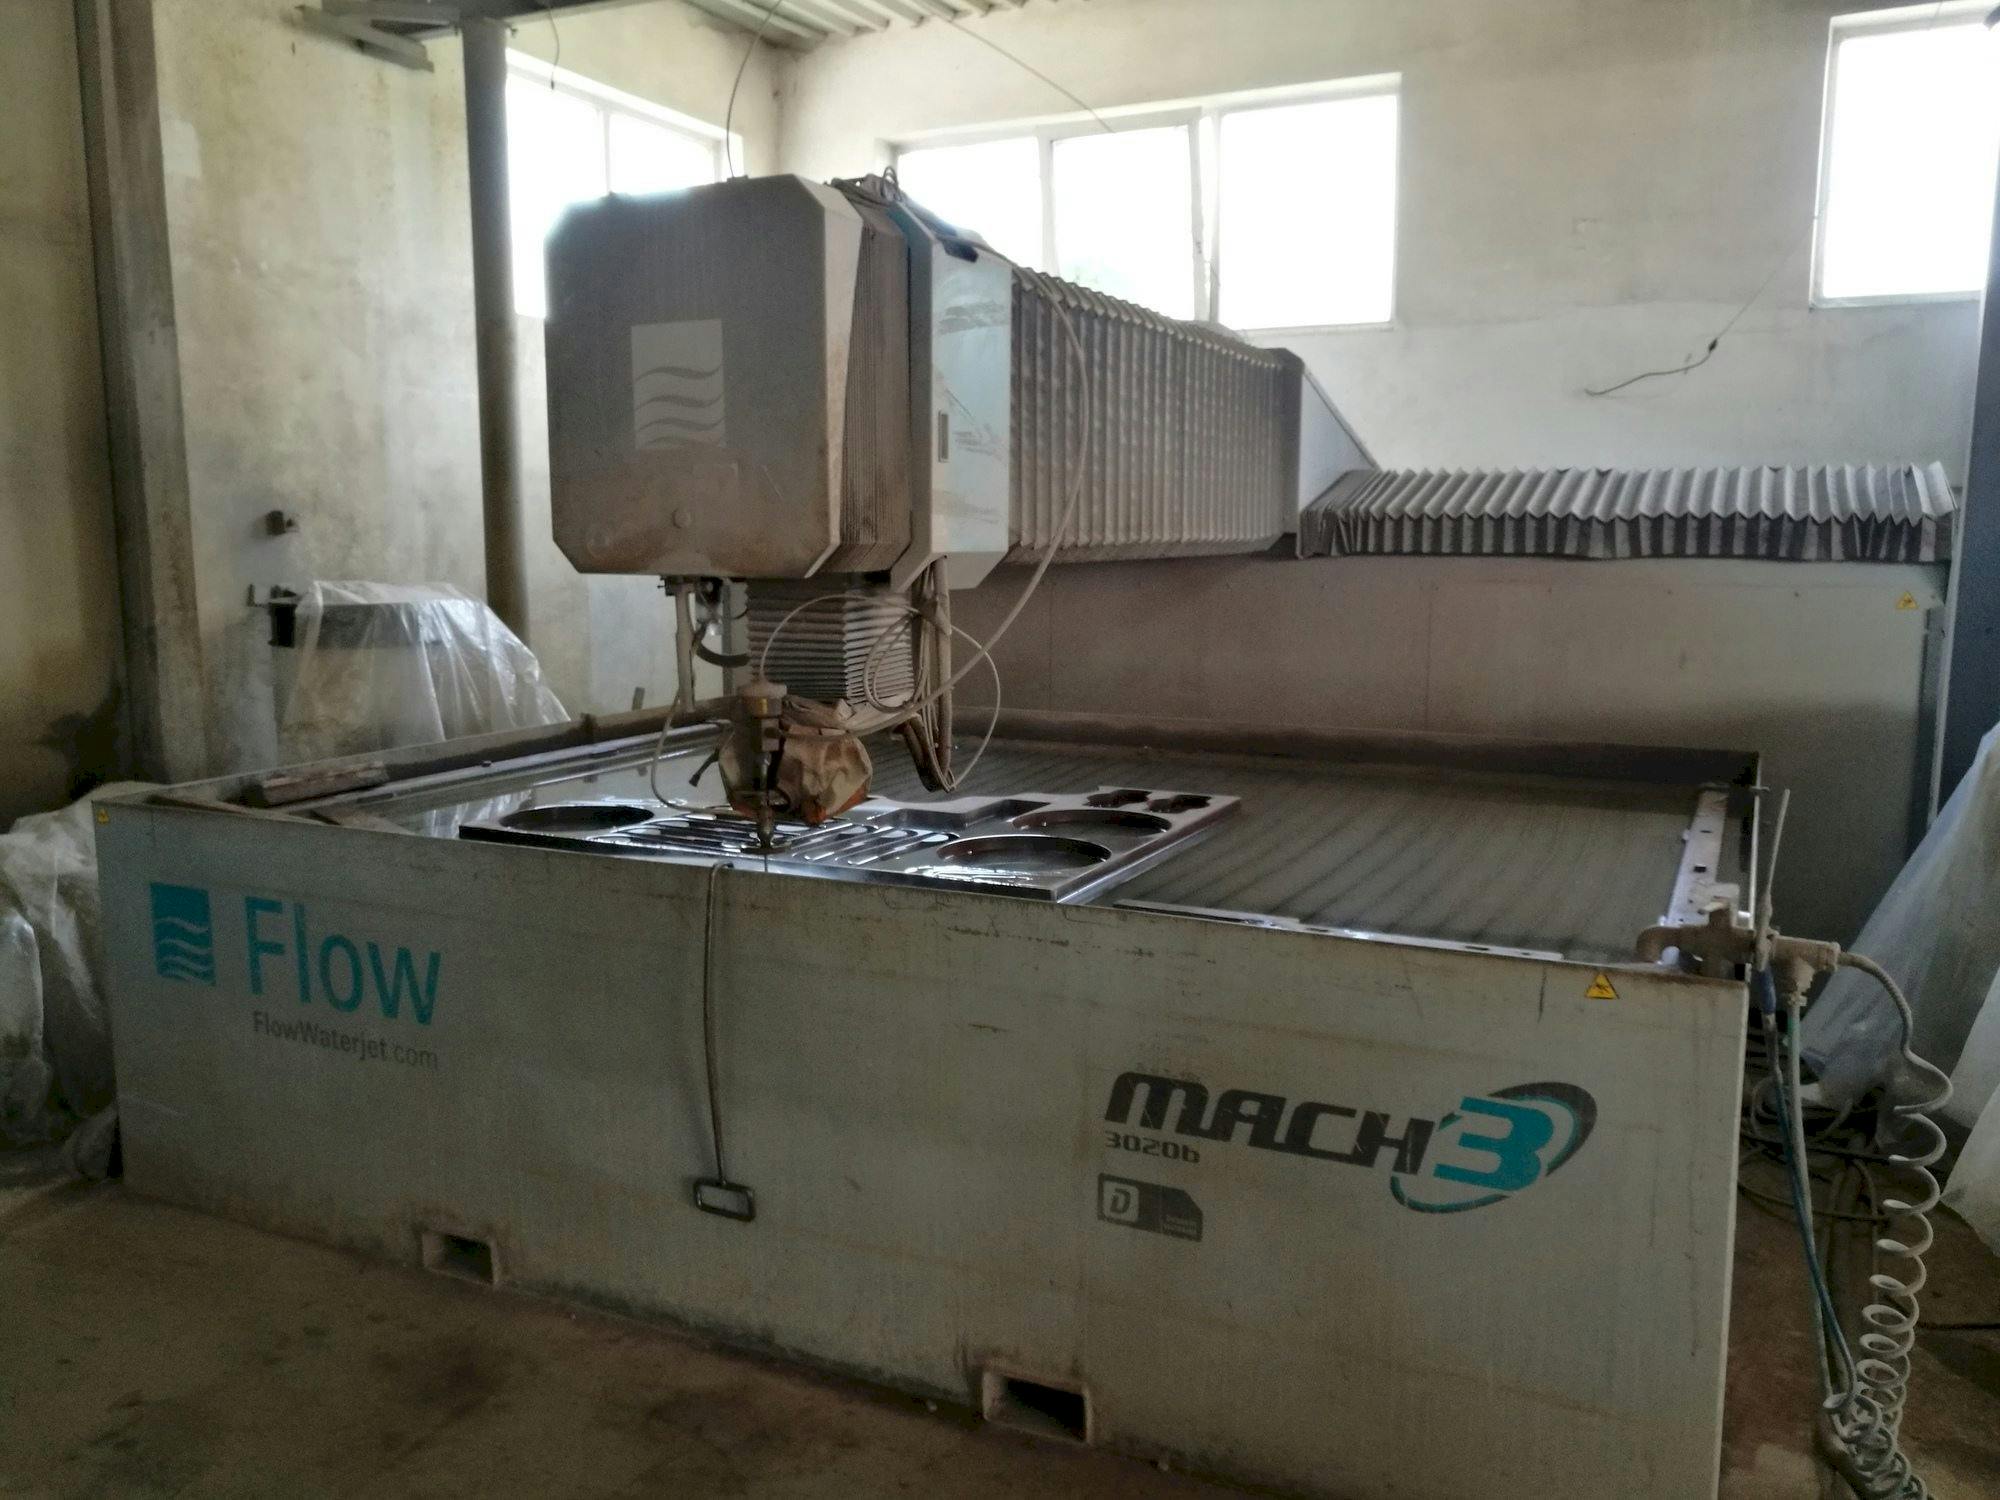 Vista frontal de la máquina Flow Mach3-3020b